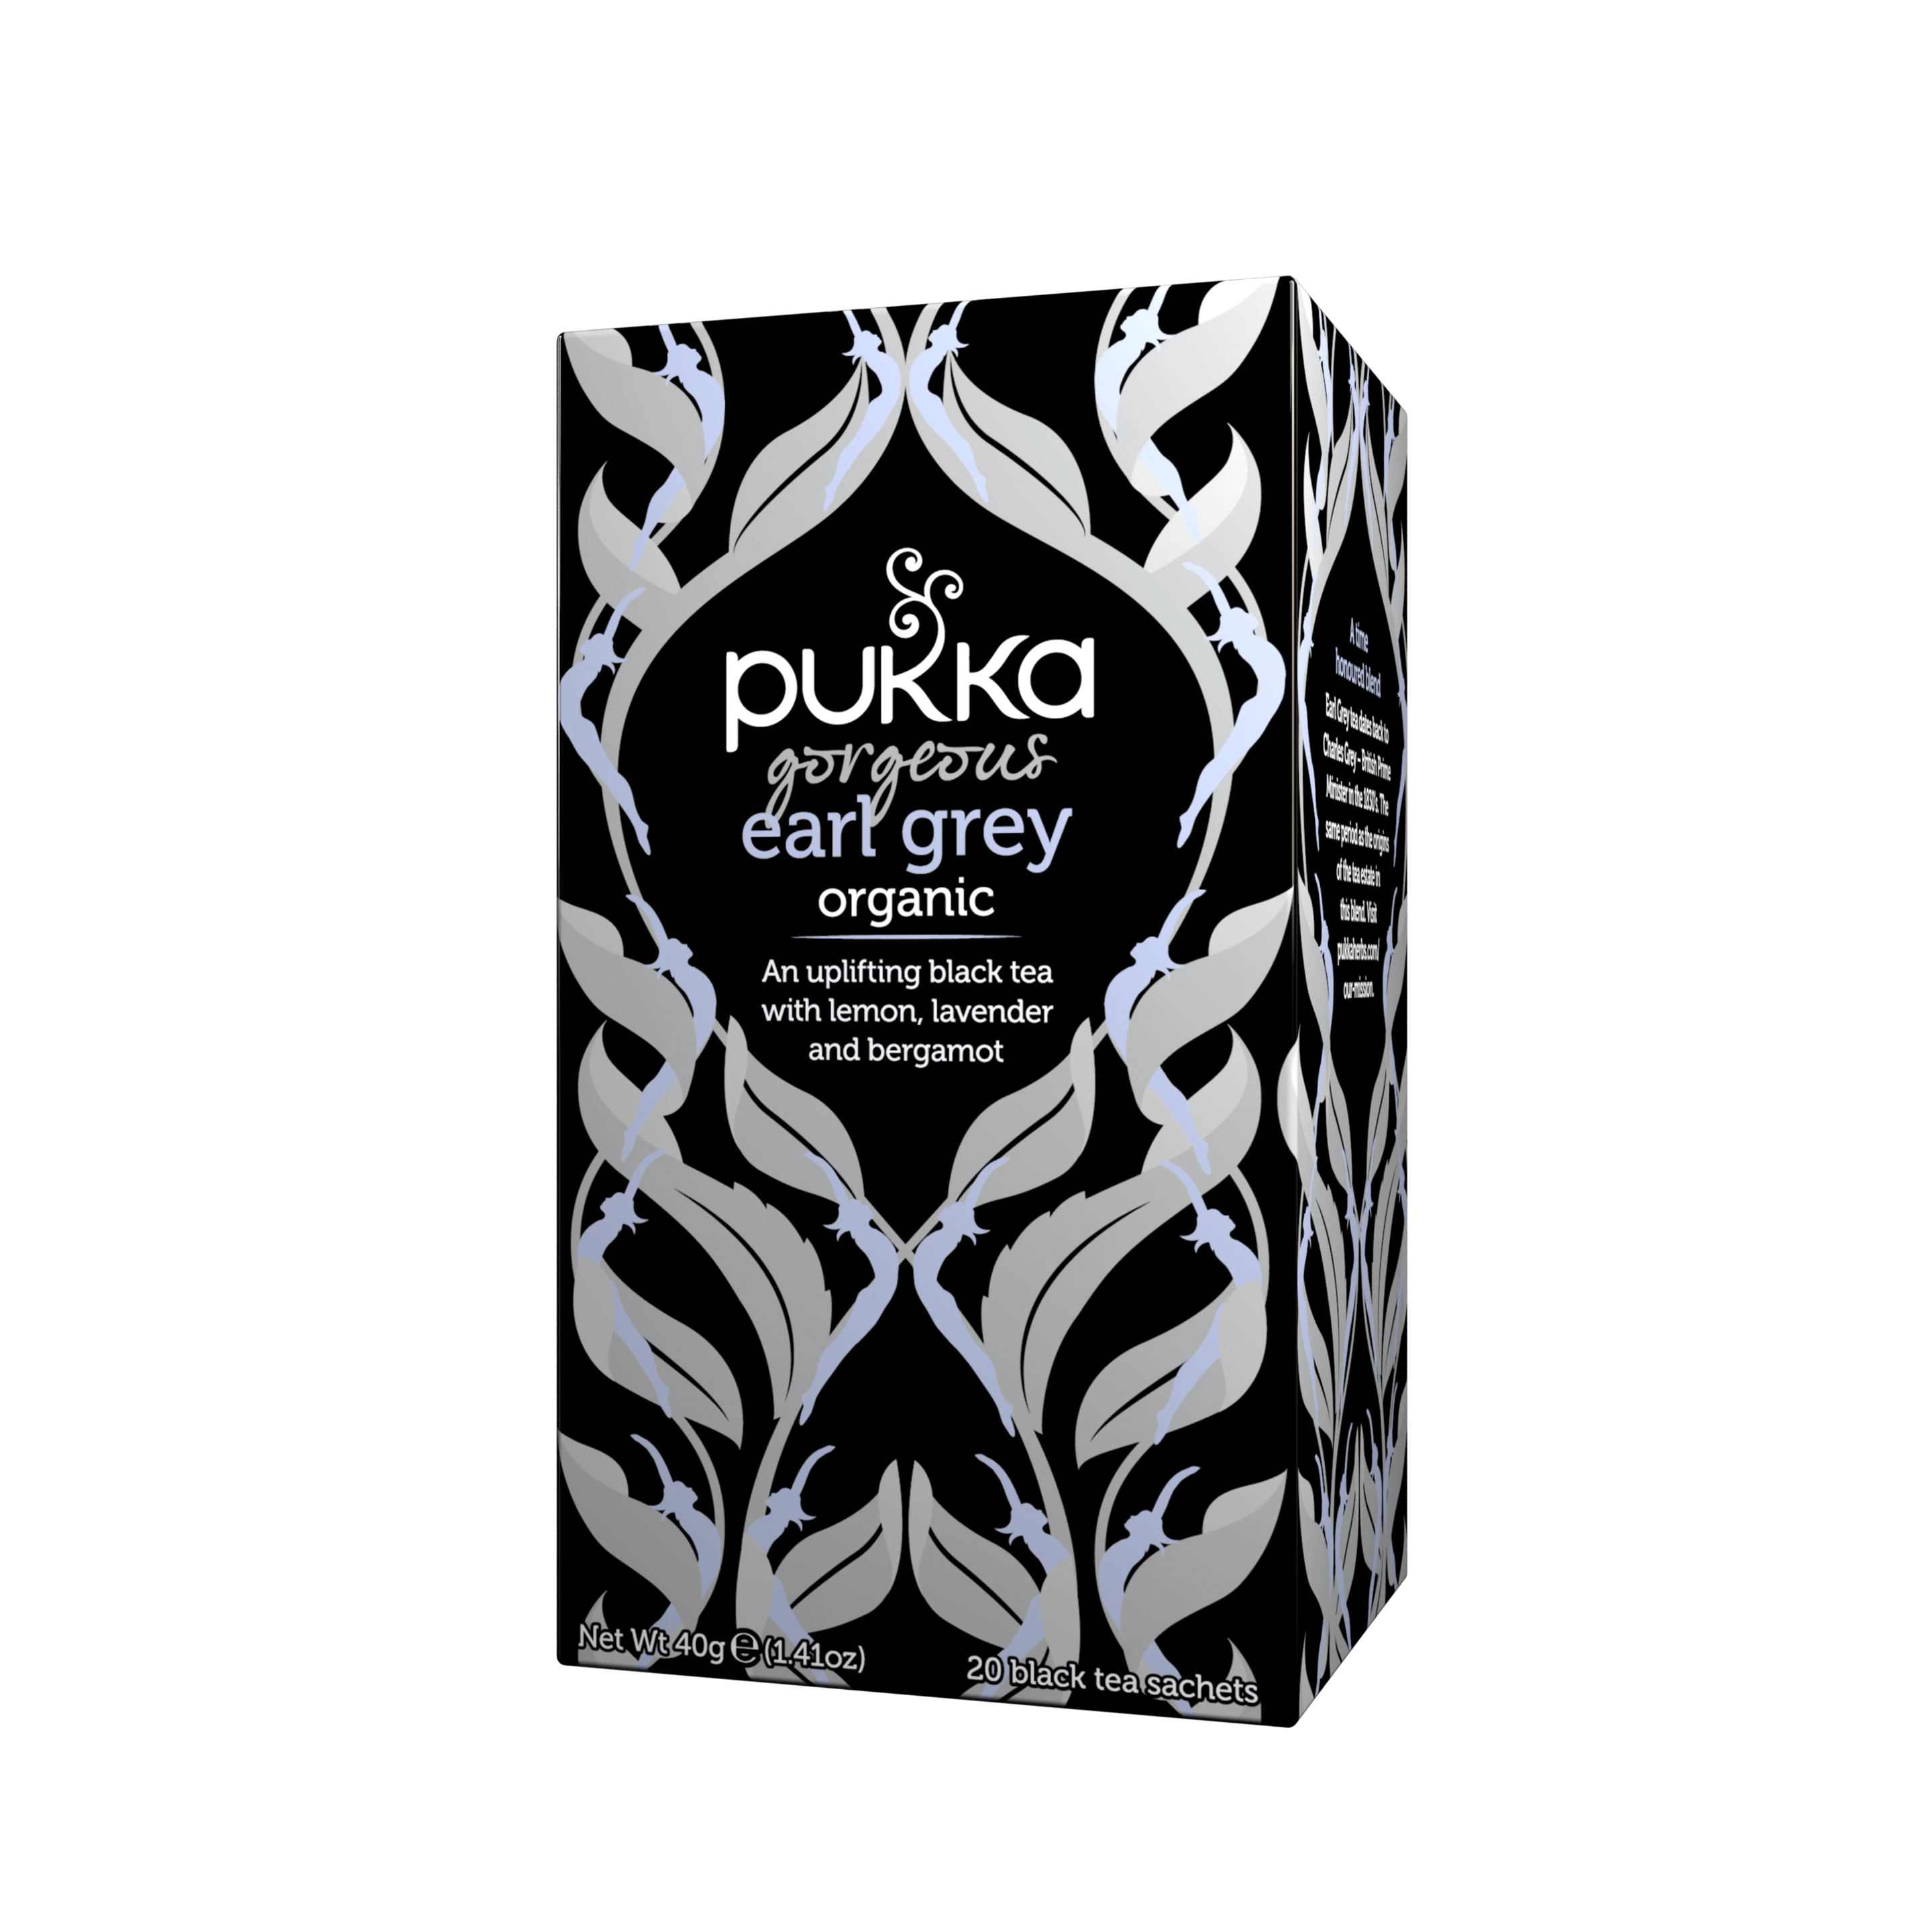 Pukka - Gorgeous Earl Grey